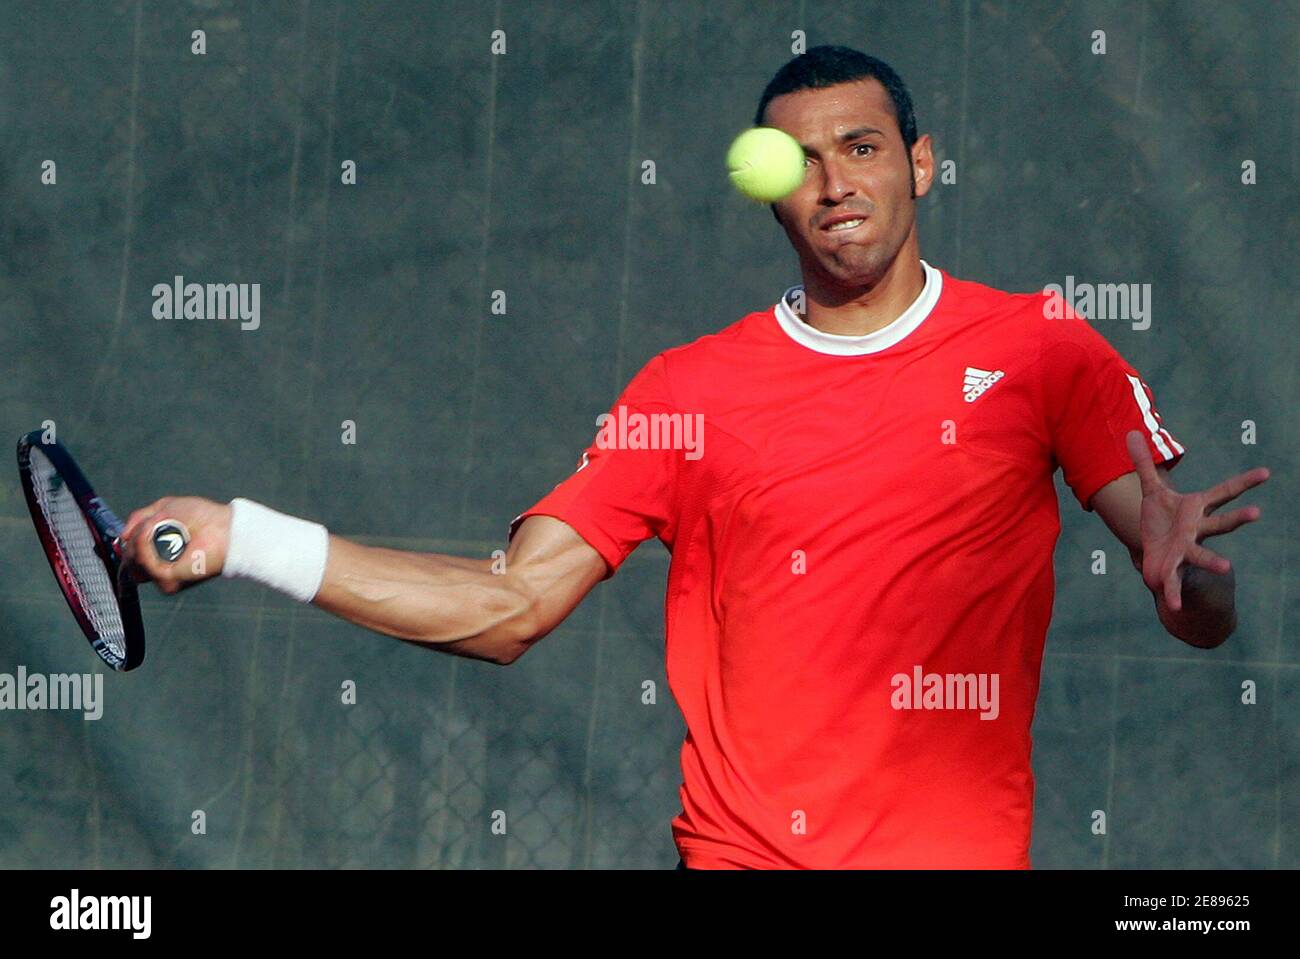 krom Televisie kijken veel plezier Tennis in cairo hi-res stock photography and images - Alamy